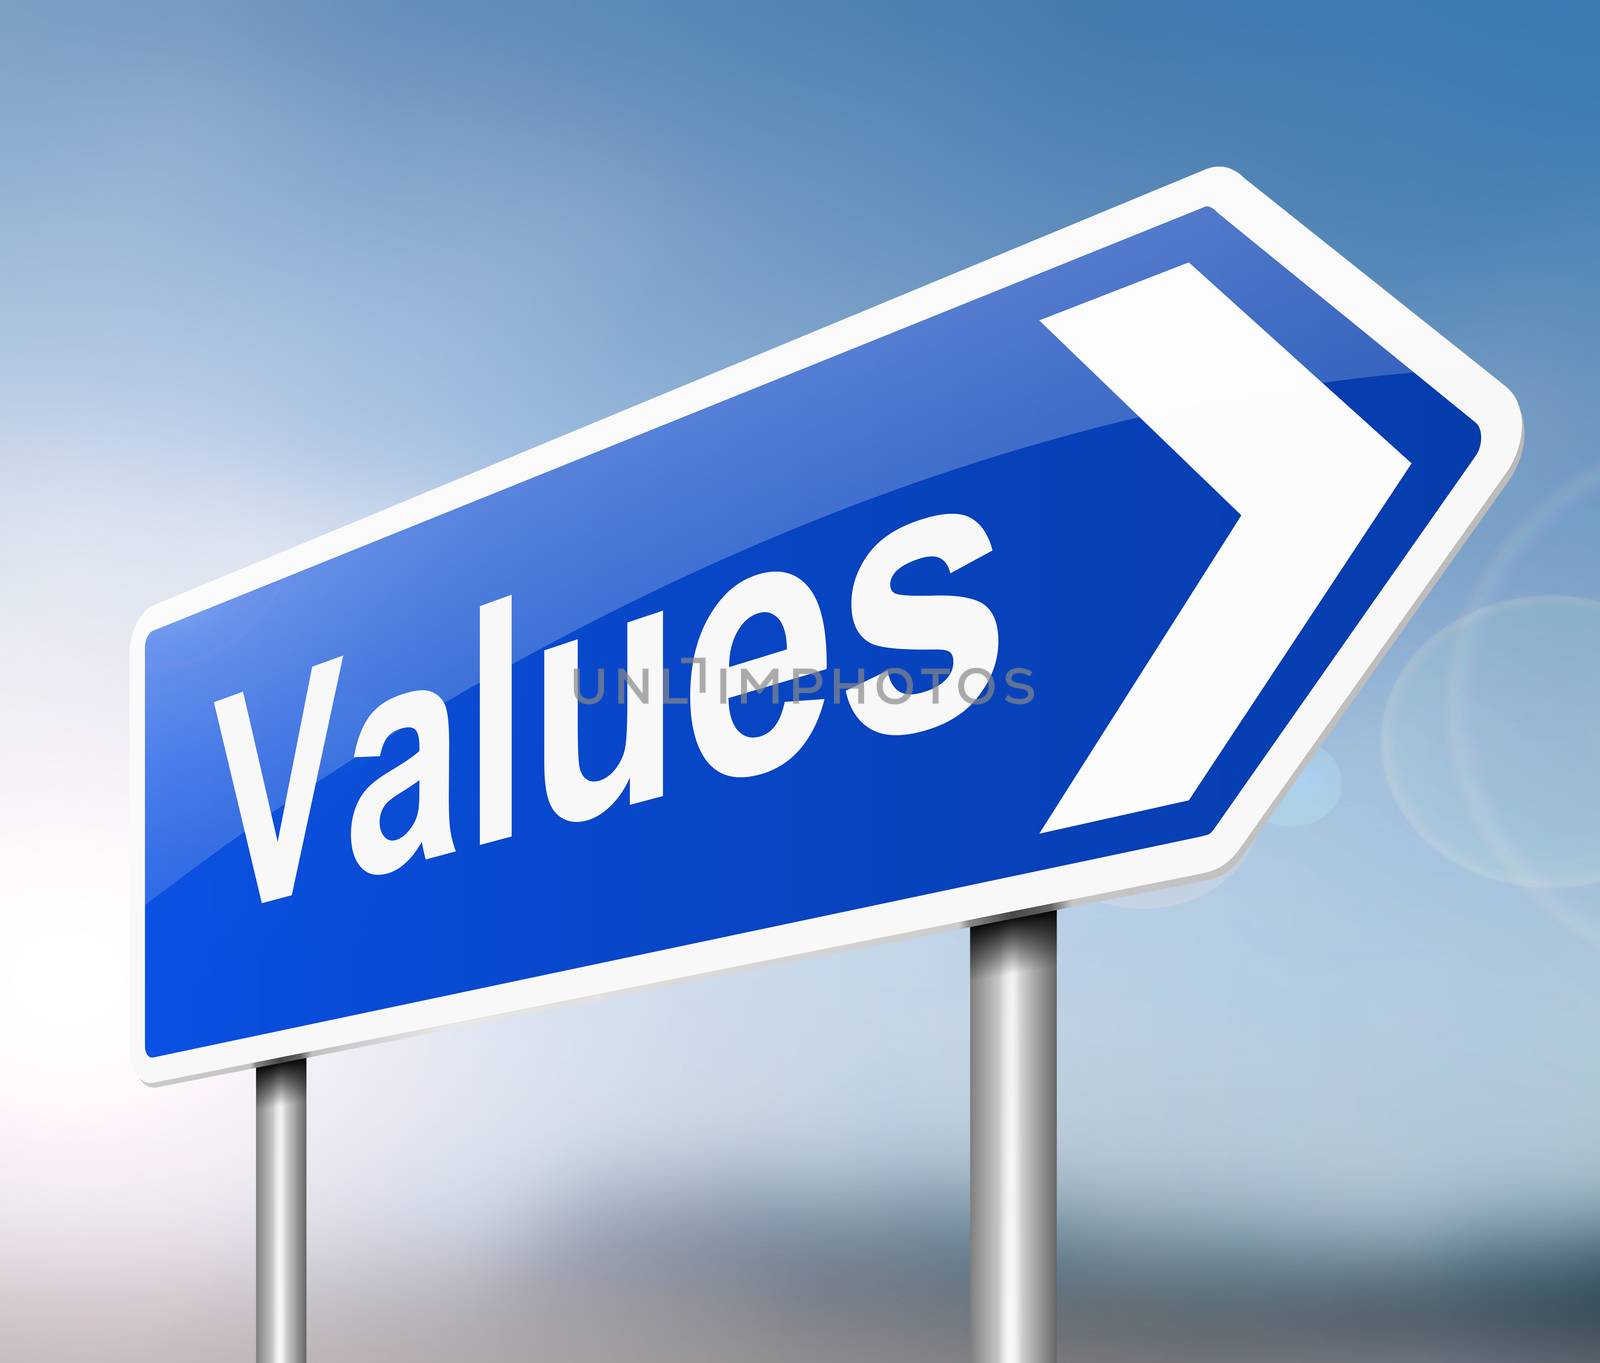 Values concept. by 72soul